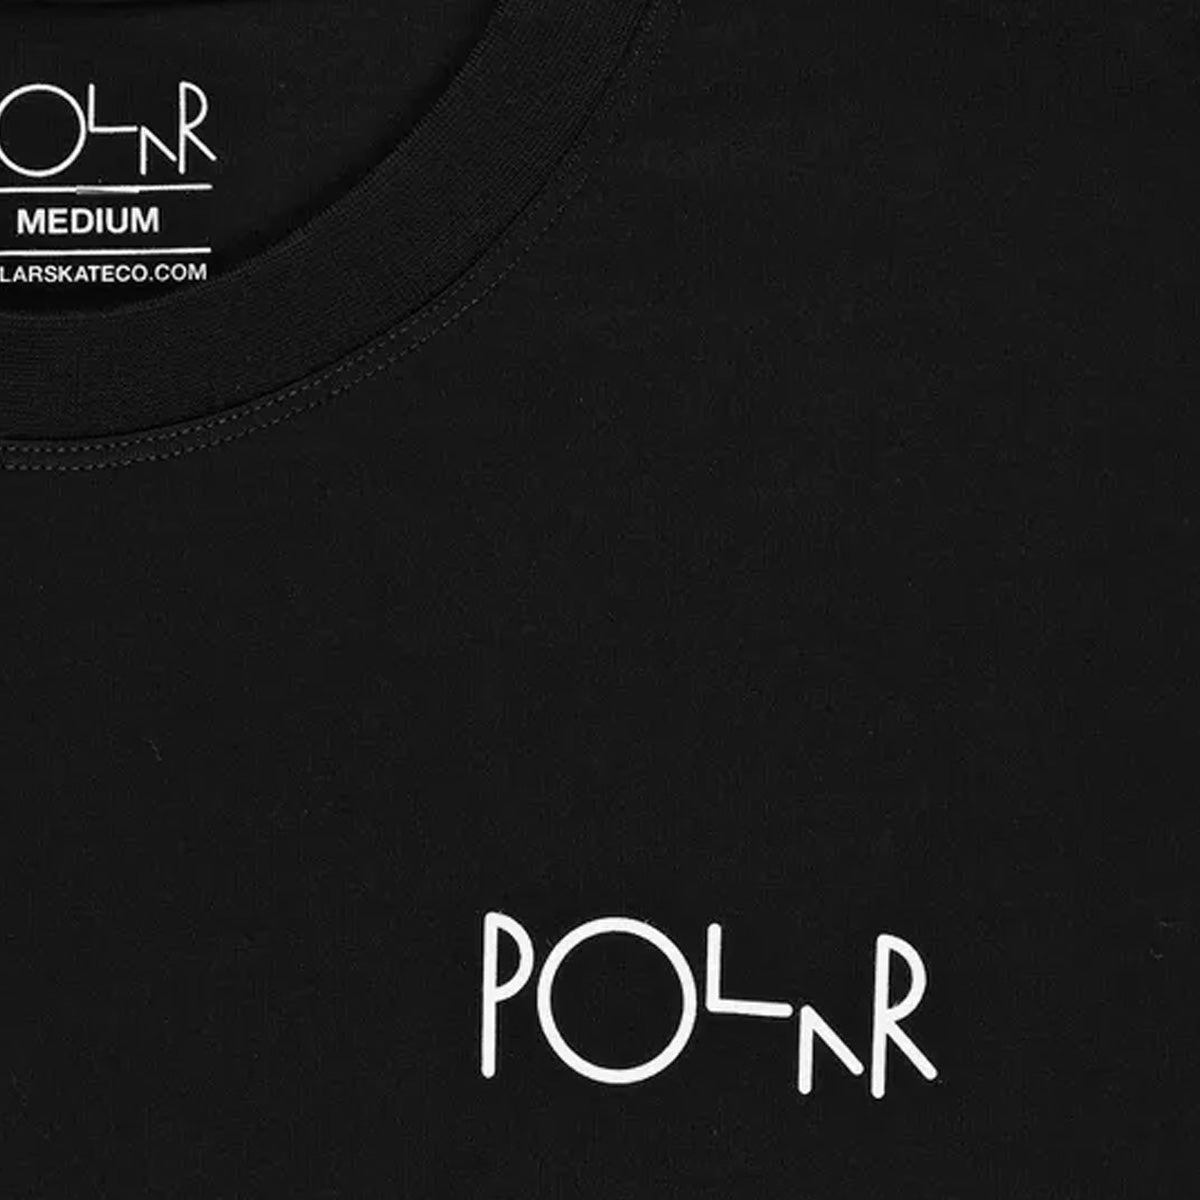 Polar Stroke Logo T-shirt - Black